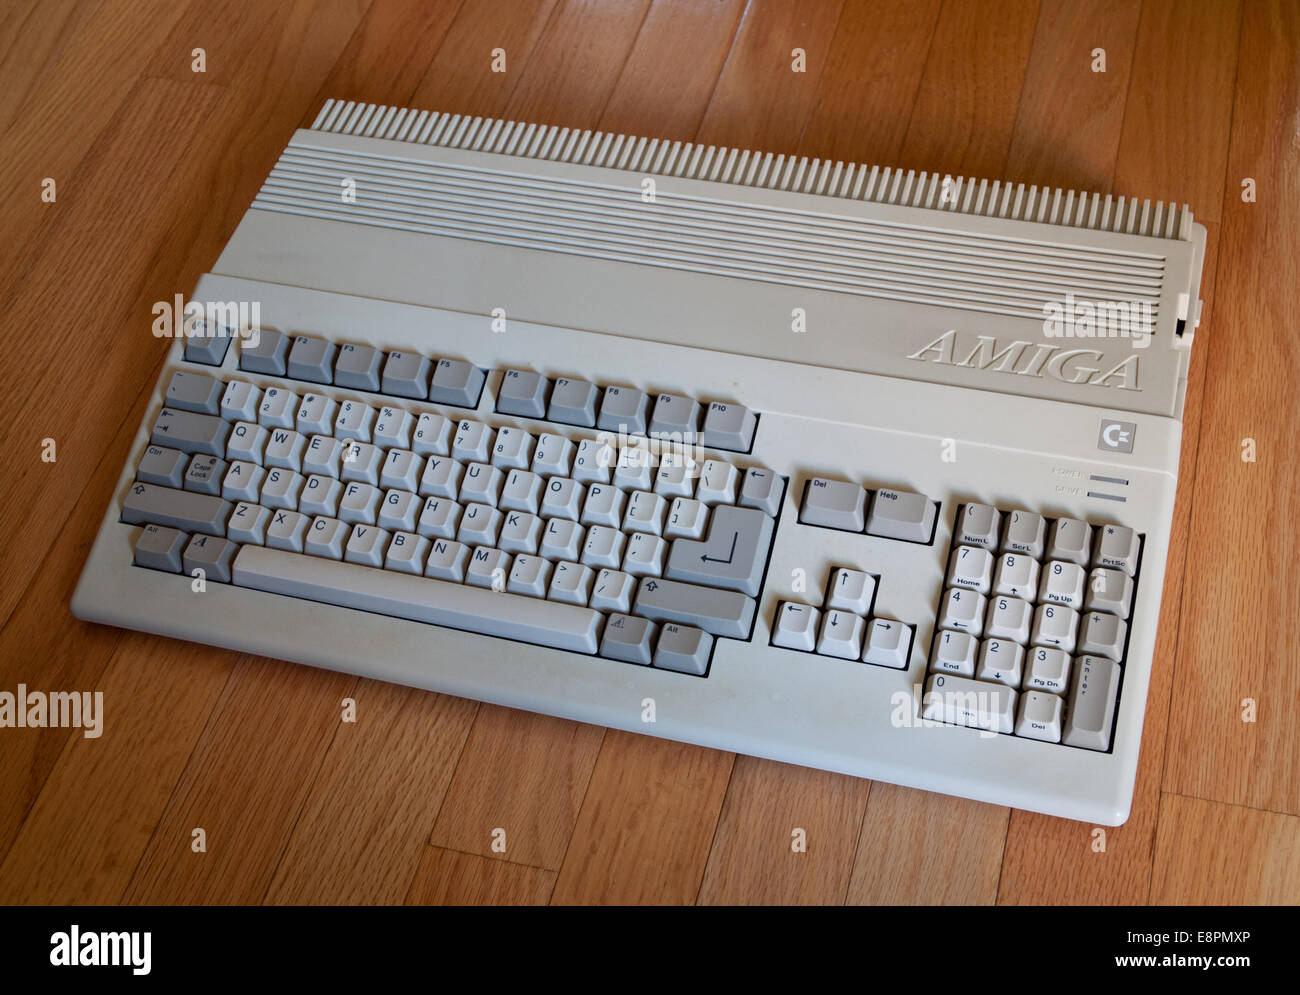 A vintage Commodore Amiga 500 computer. Stock Photo